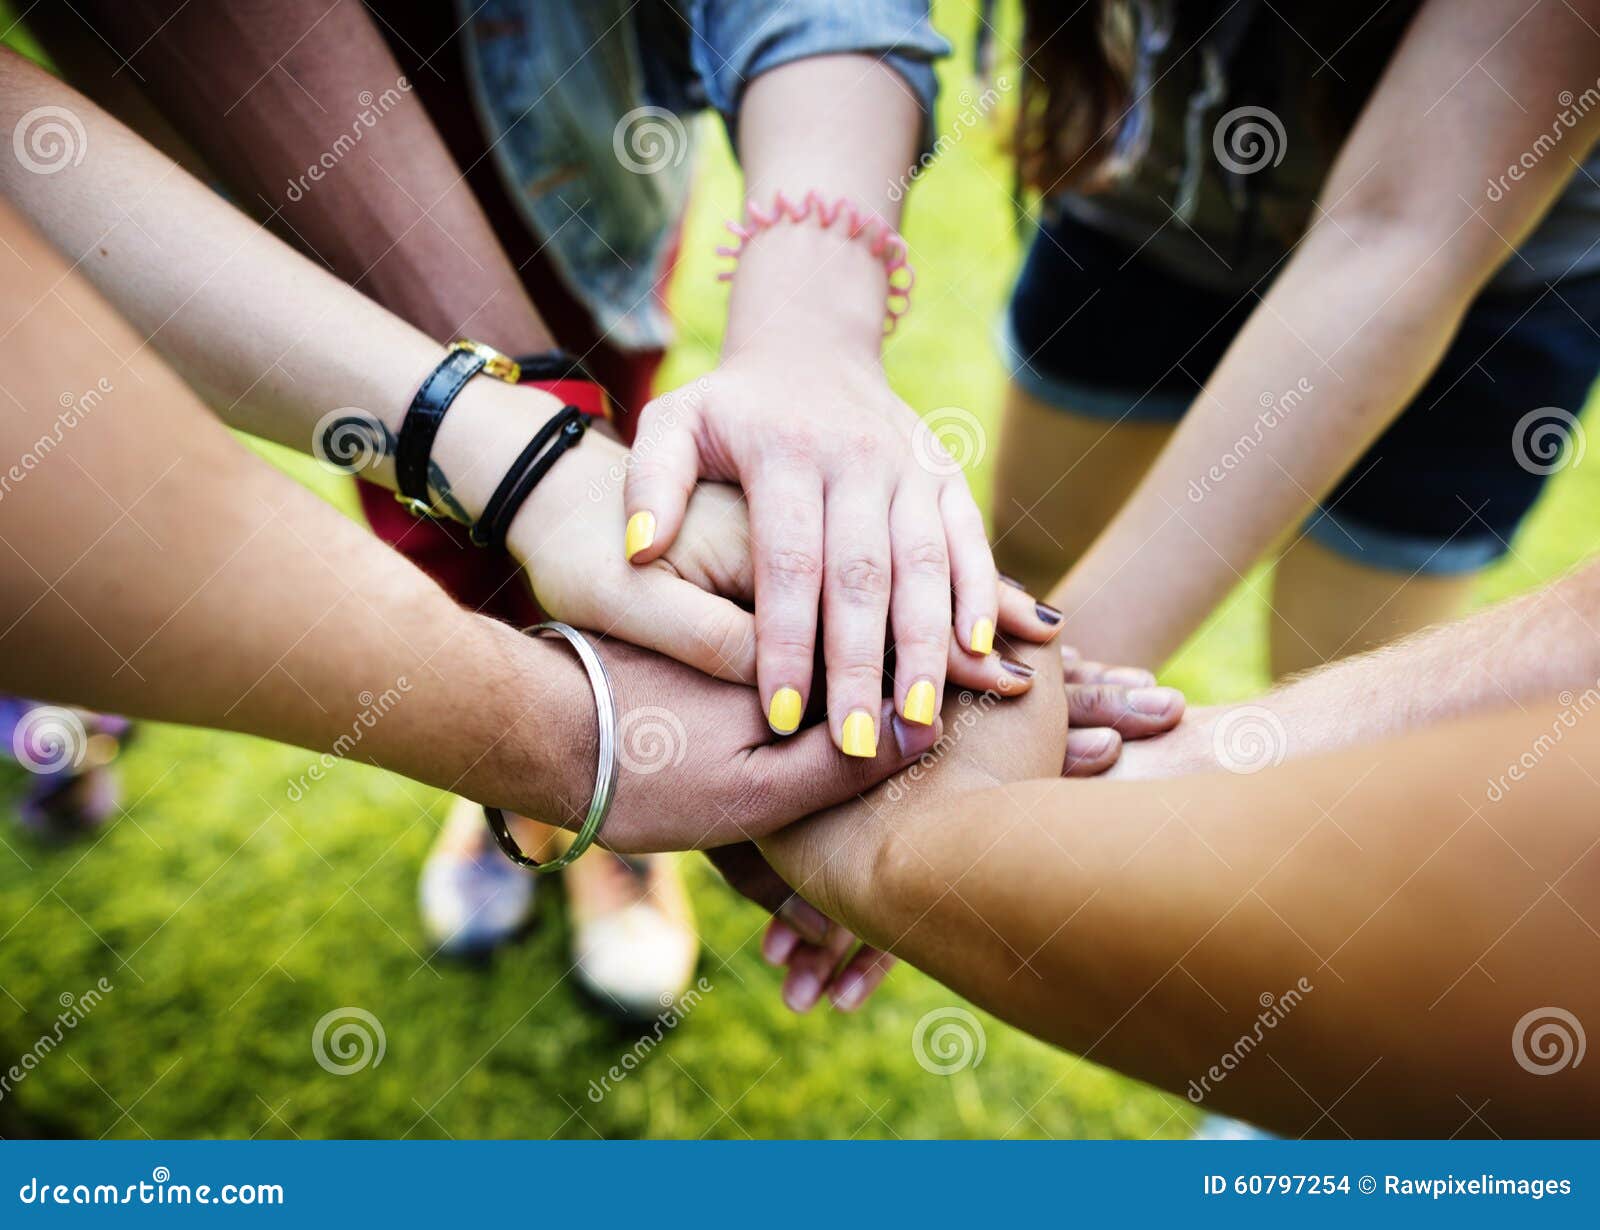 team teamwork relation together unity friendship concept